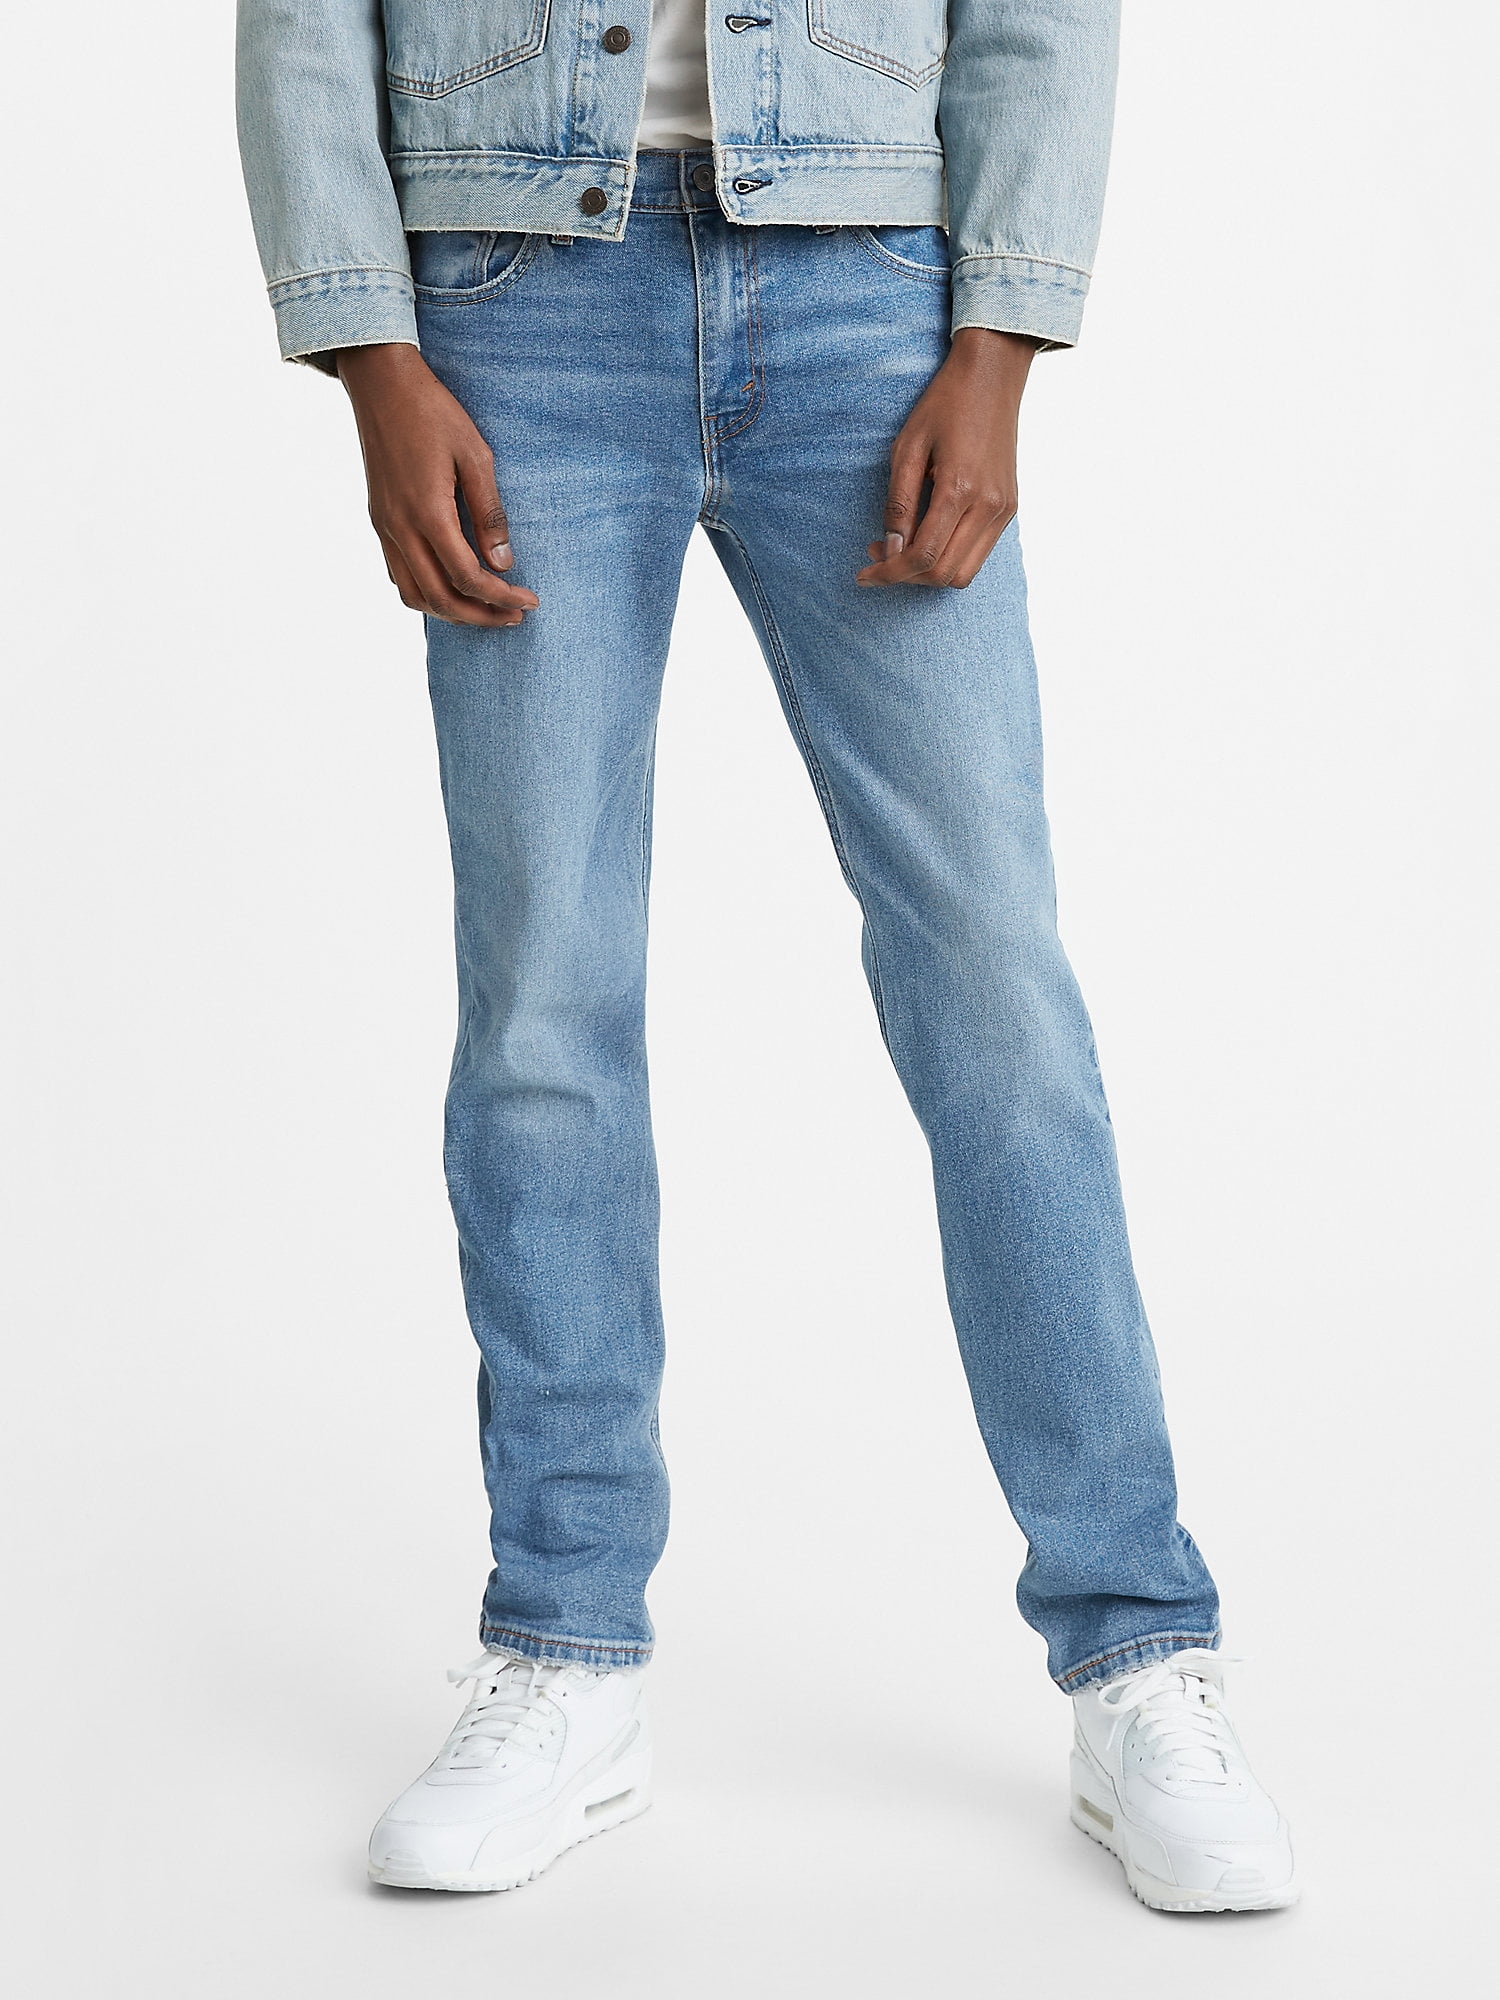 taxa Sydøst Forinden Levi's Men's 511 Slim Fit Jeans - Walmart.com